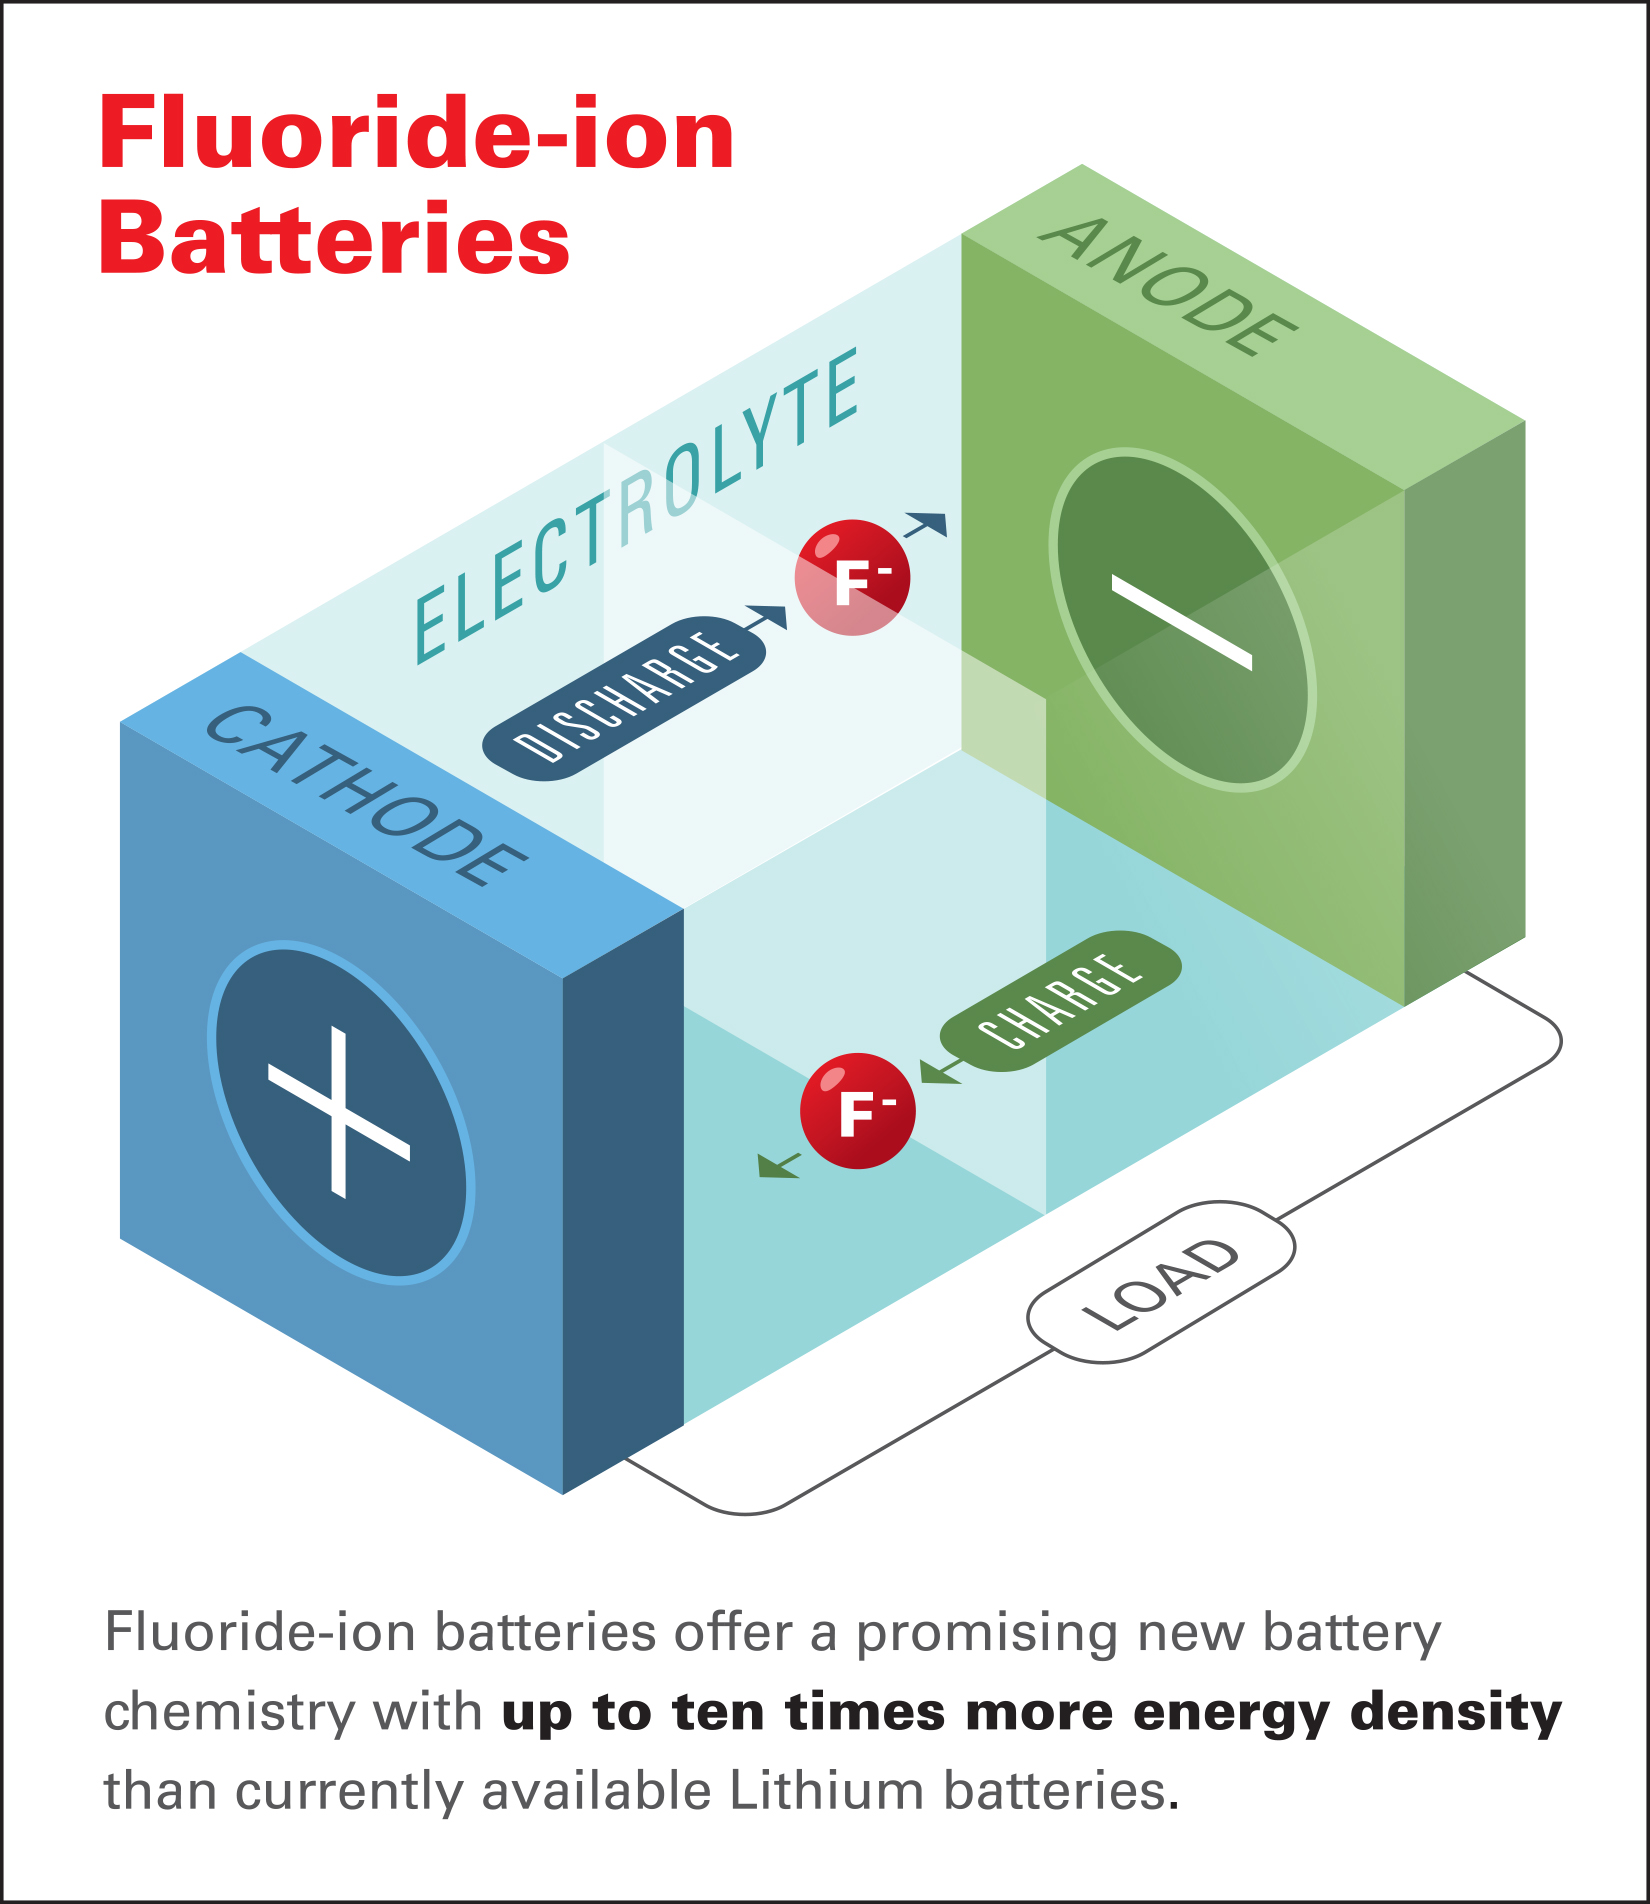 Honda Research Institute develops breakthrough battery chemistry